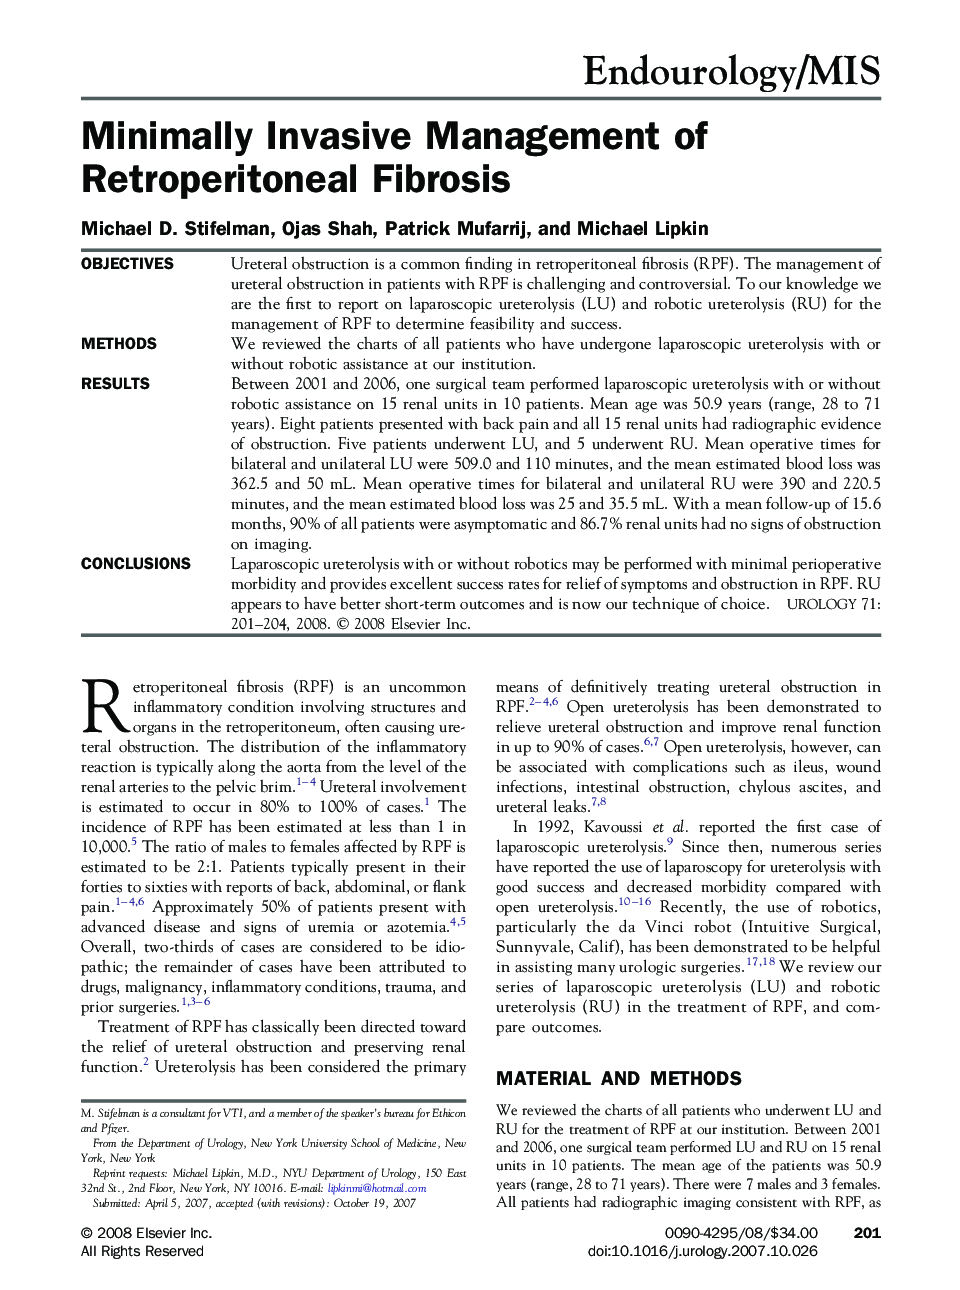 Minimally Invasive Management of Retroperitoneal Fibrosis